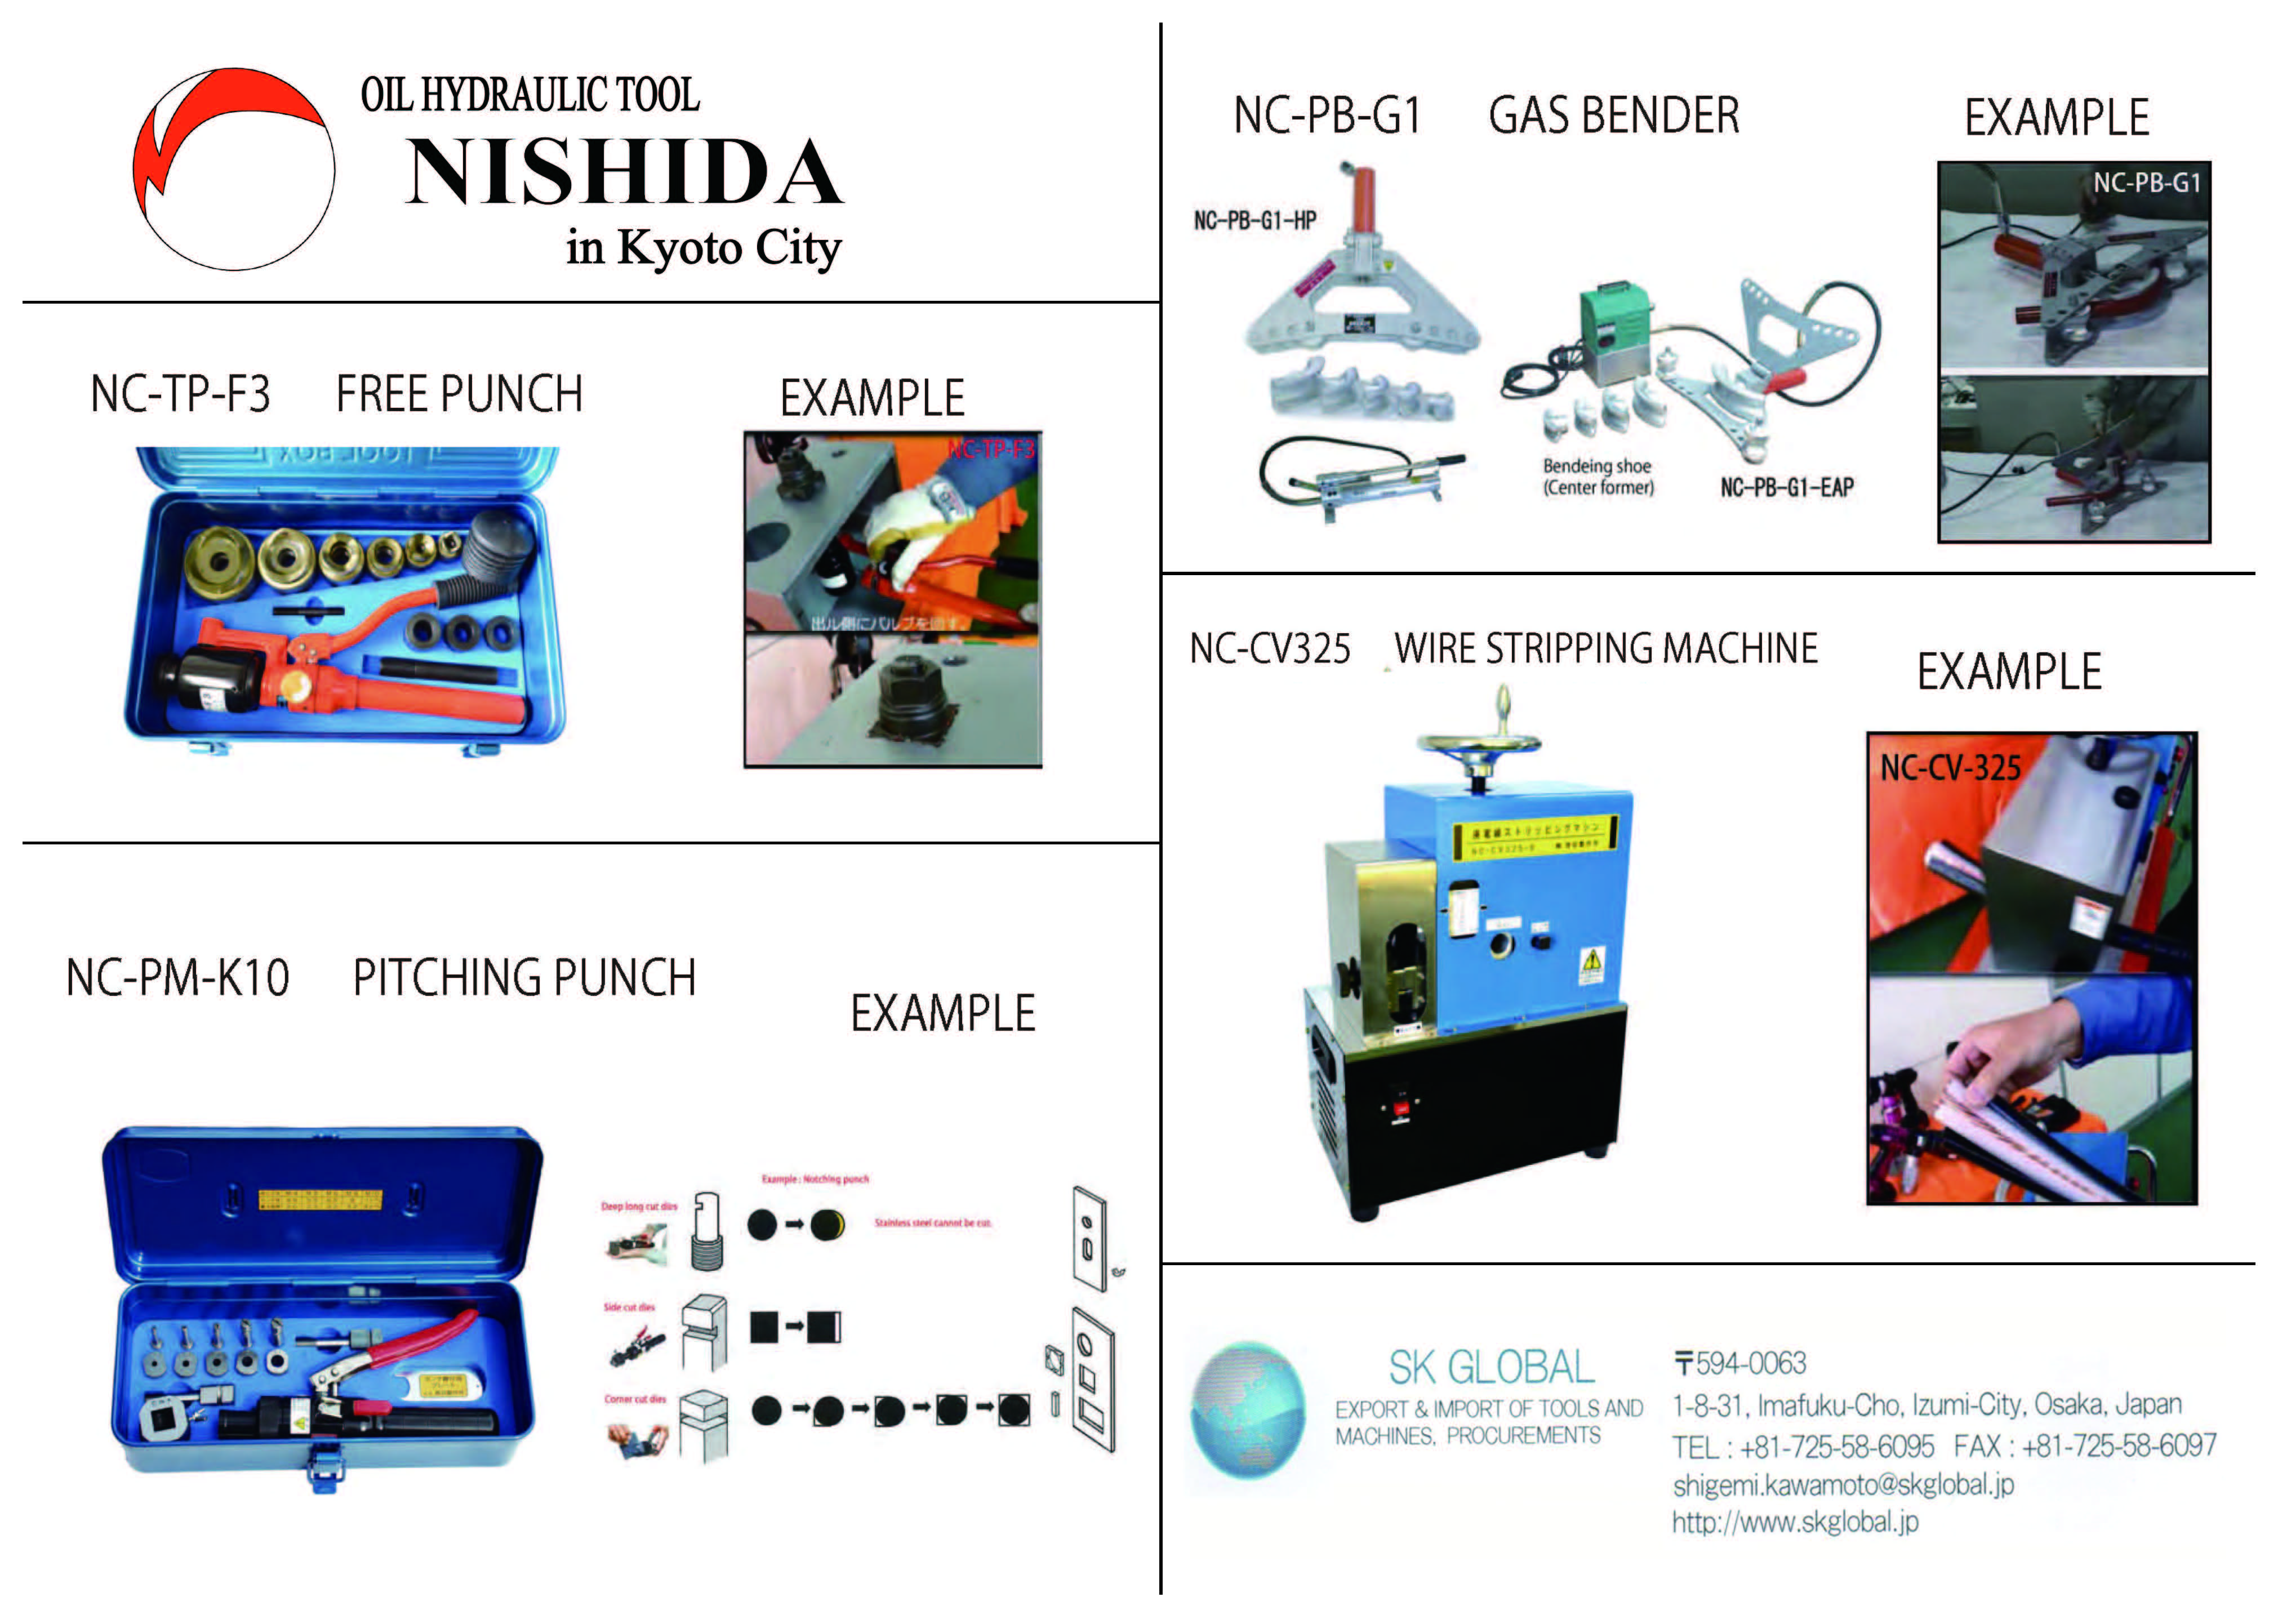 Glance at NISHIDA example of user